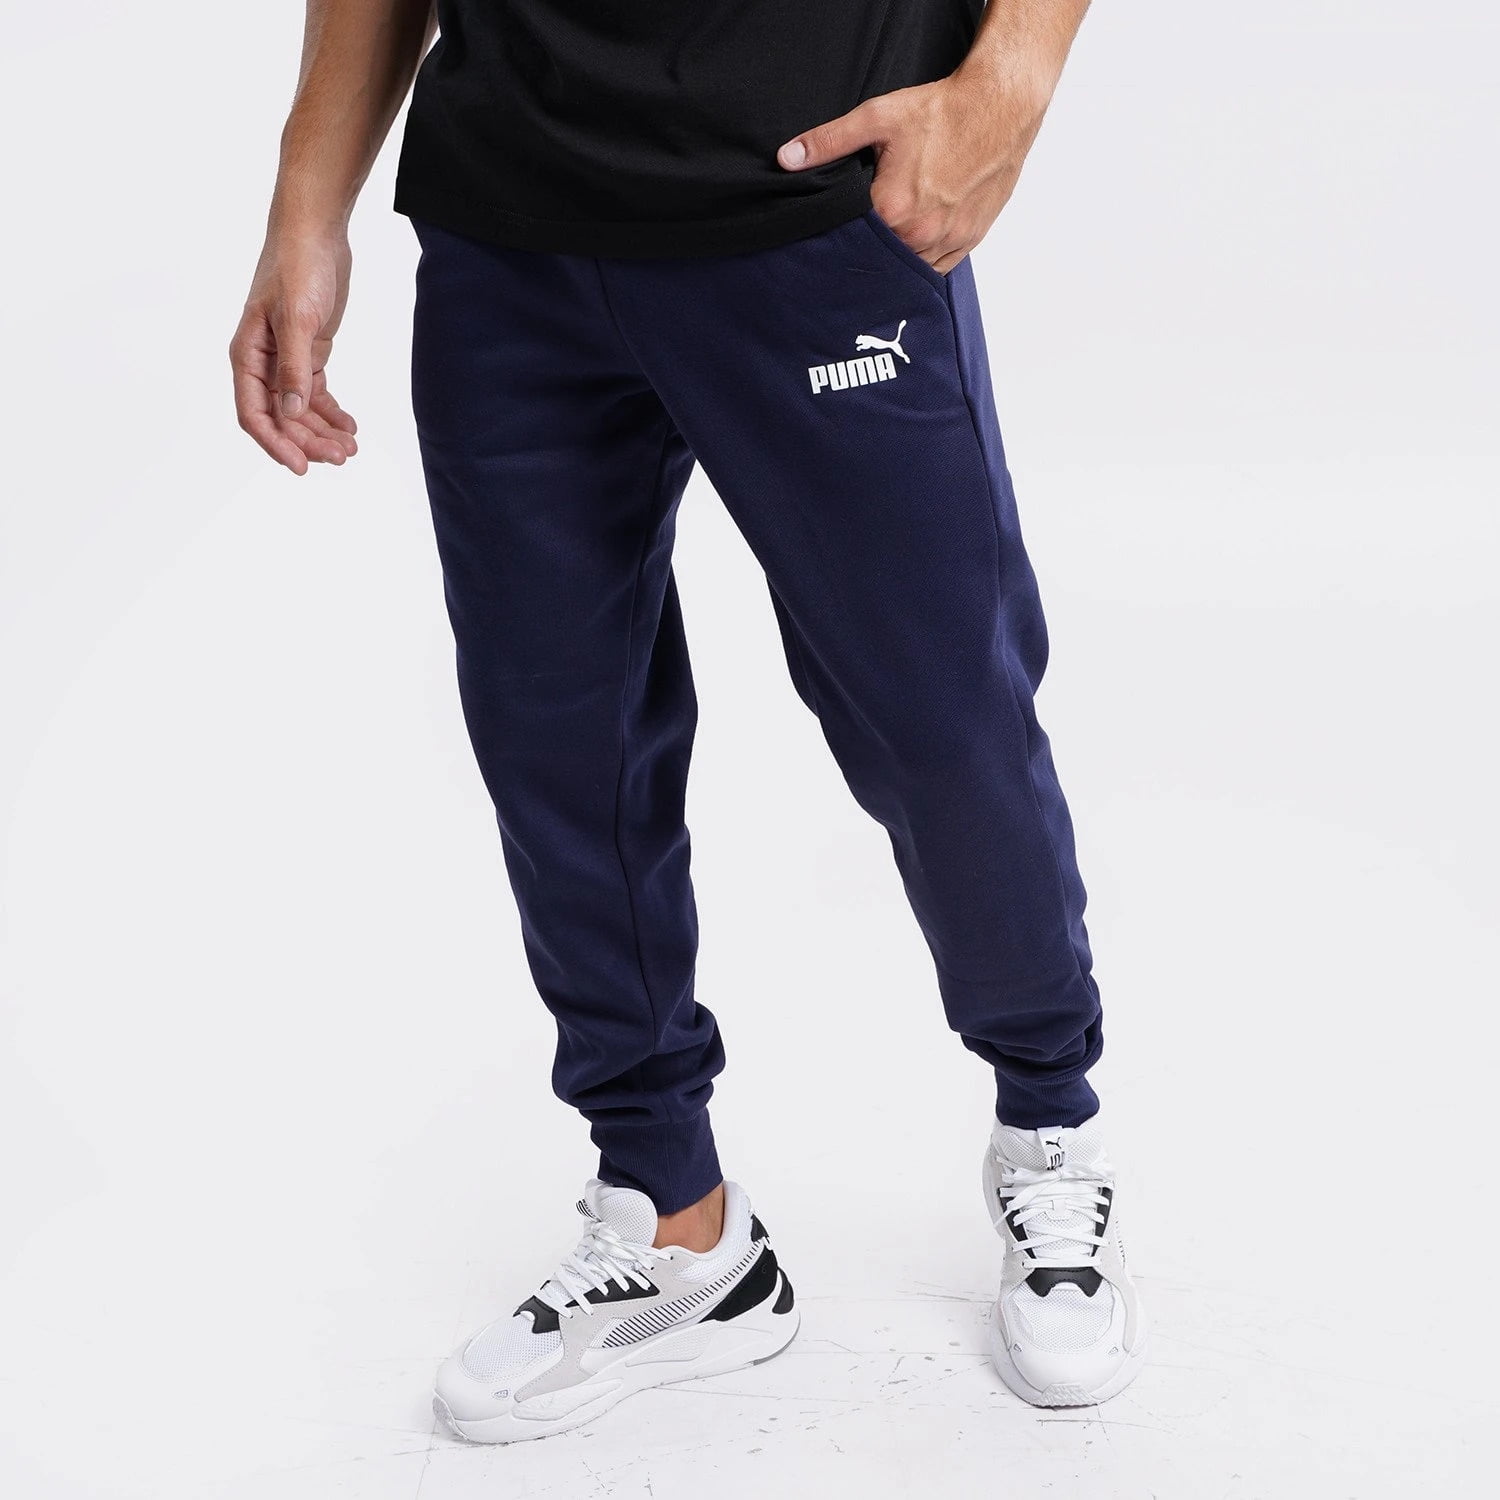 586714-06] Pants Logo Puma Mens Fleece Essential